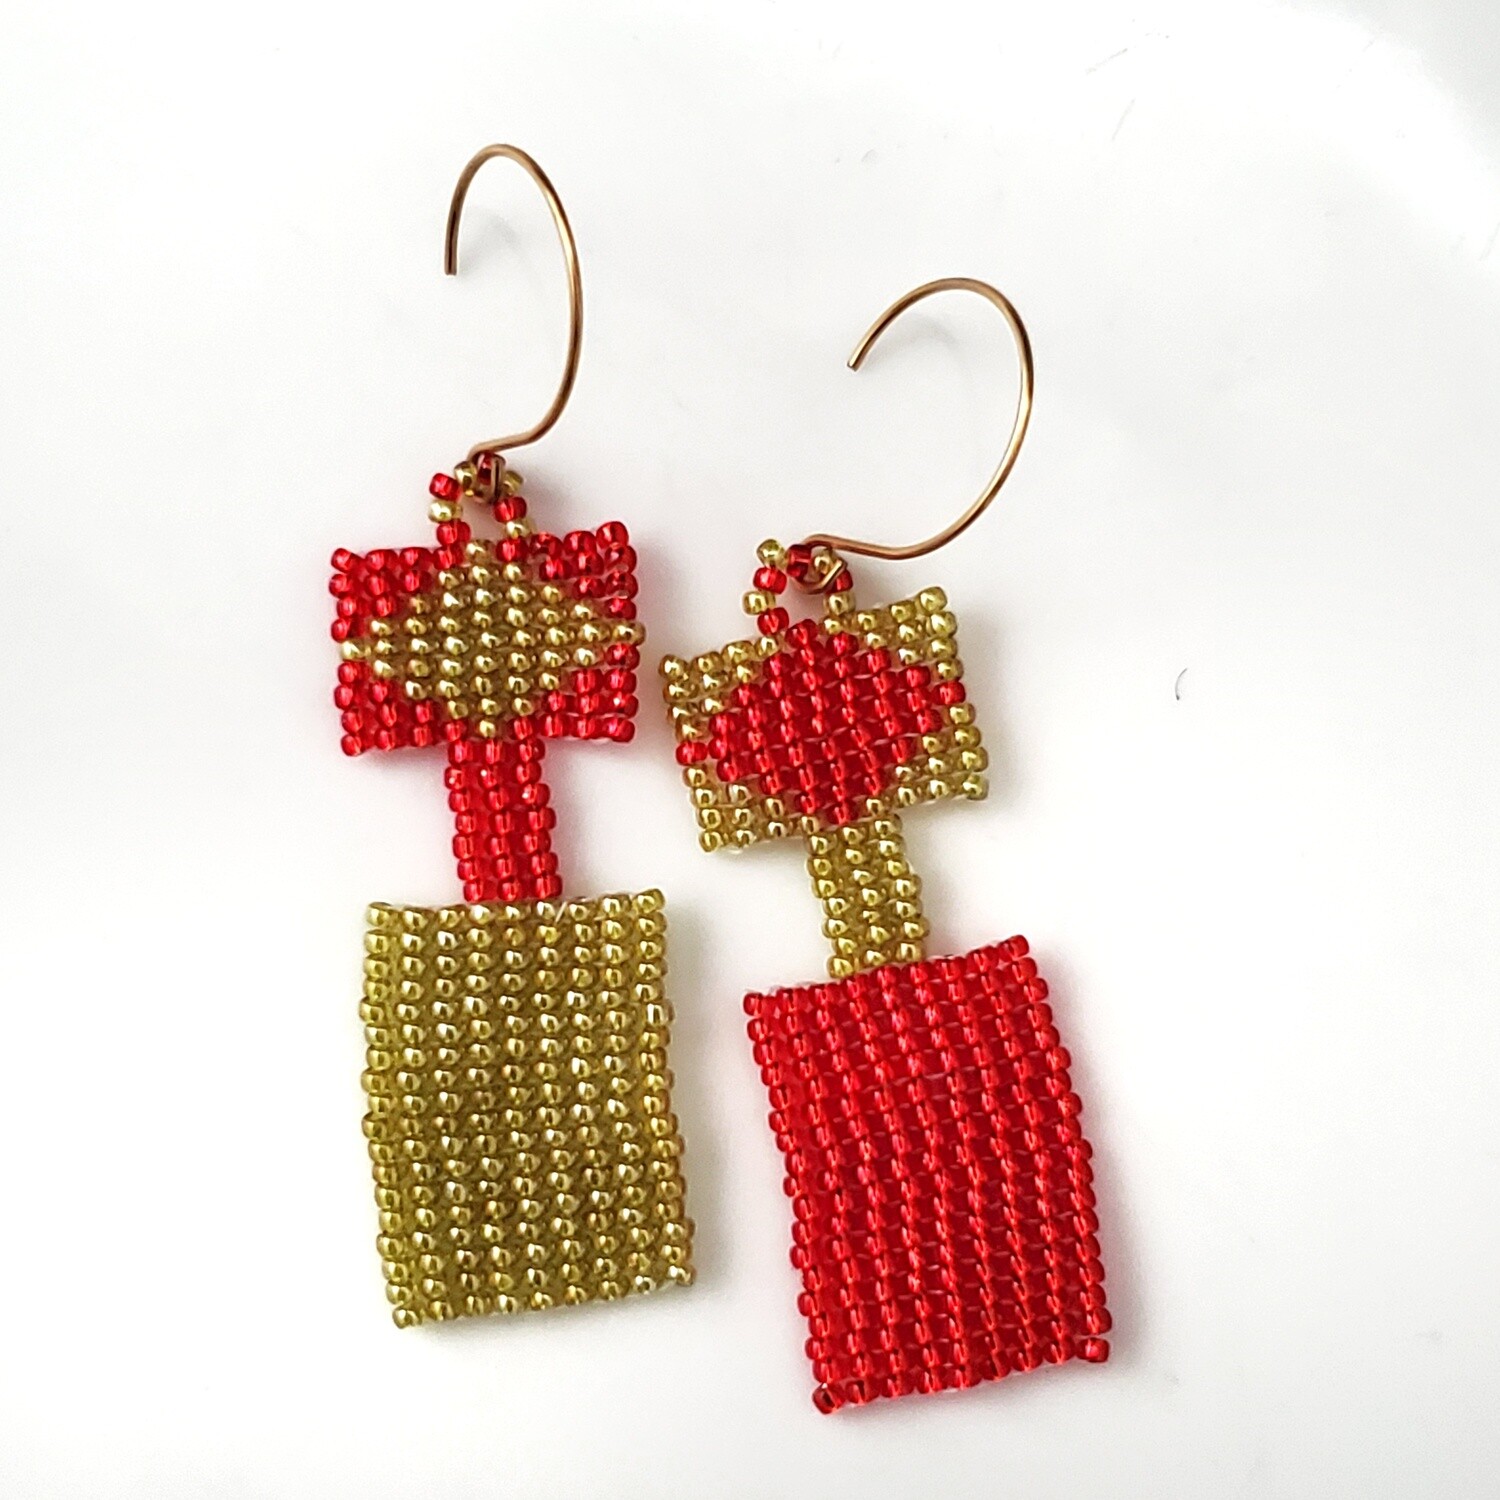 Handmade Red and Yellow Dangle Earrings